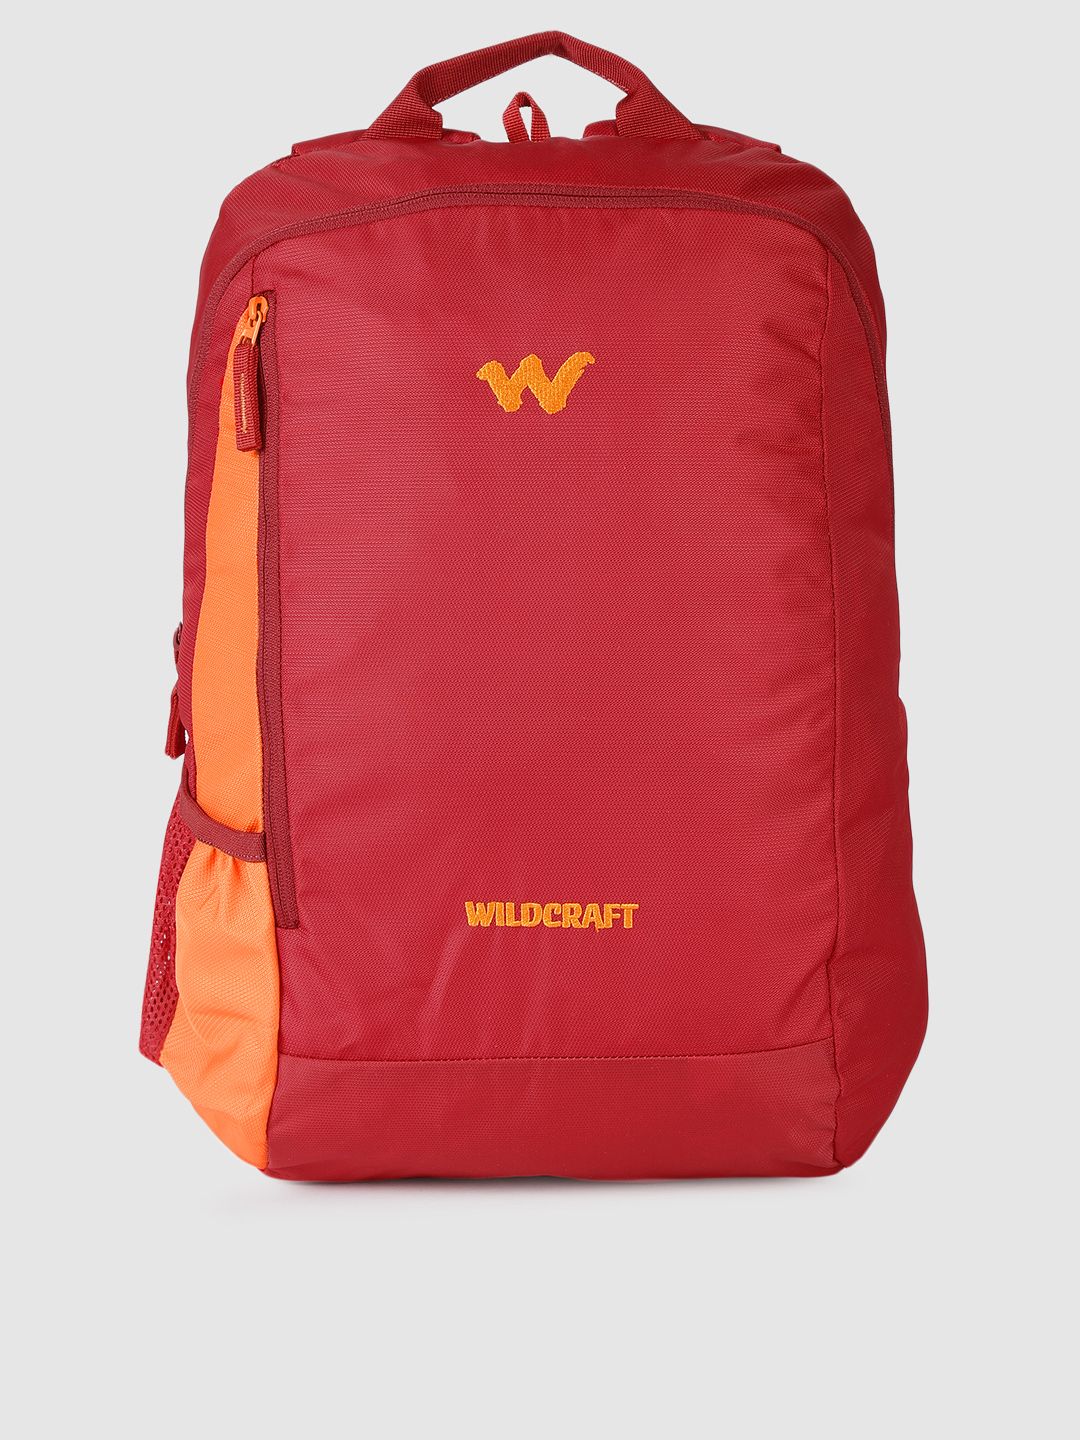 Wildcraft Unisex Red & Orange Streak 1.0 Solid Backpack Price in India